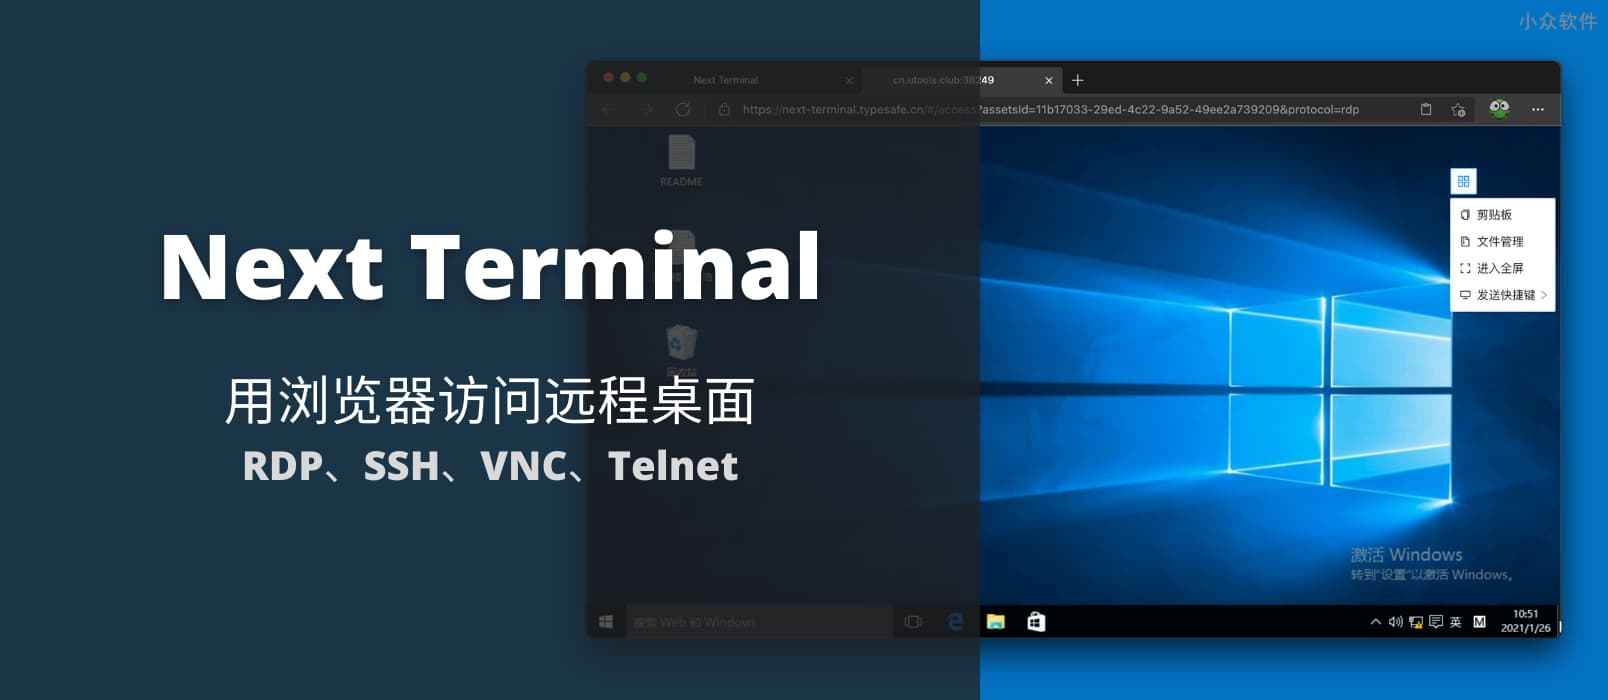 Next Terminal – 用浏览器访问远程桌面，支持 RDP、SSH、VNC 和 Telnet